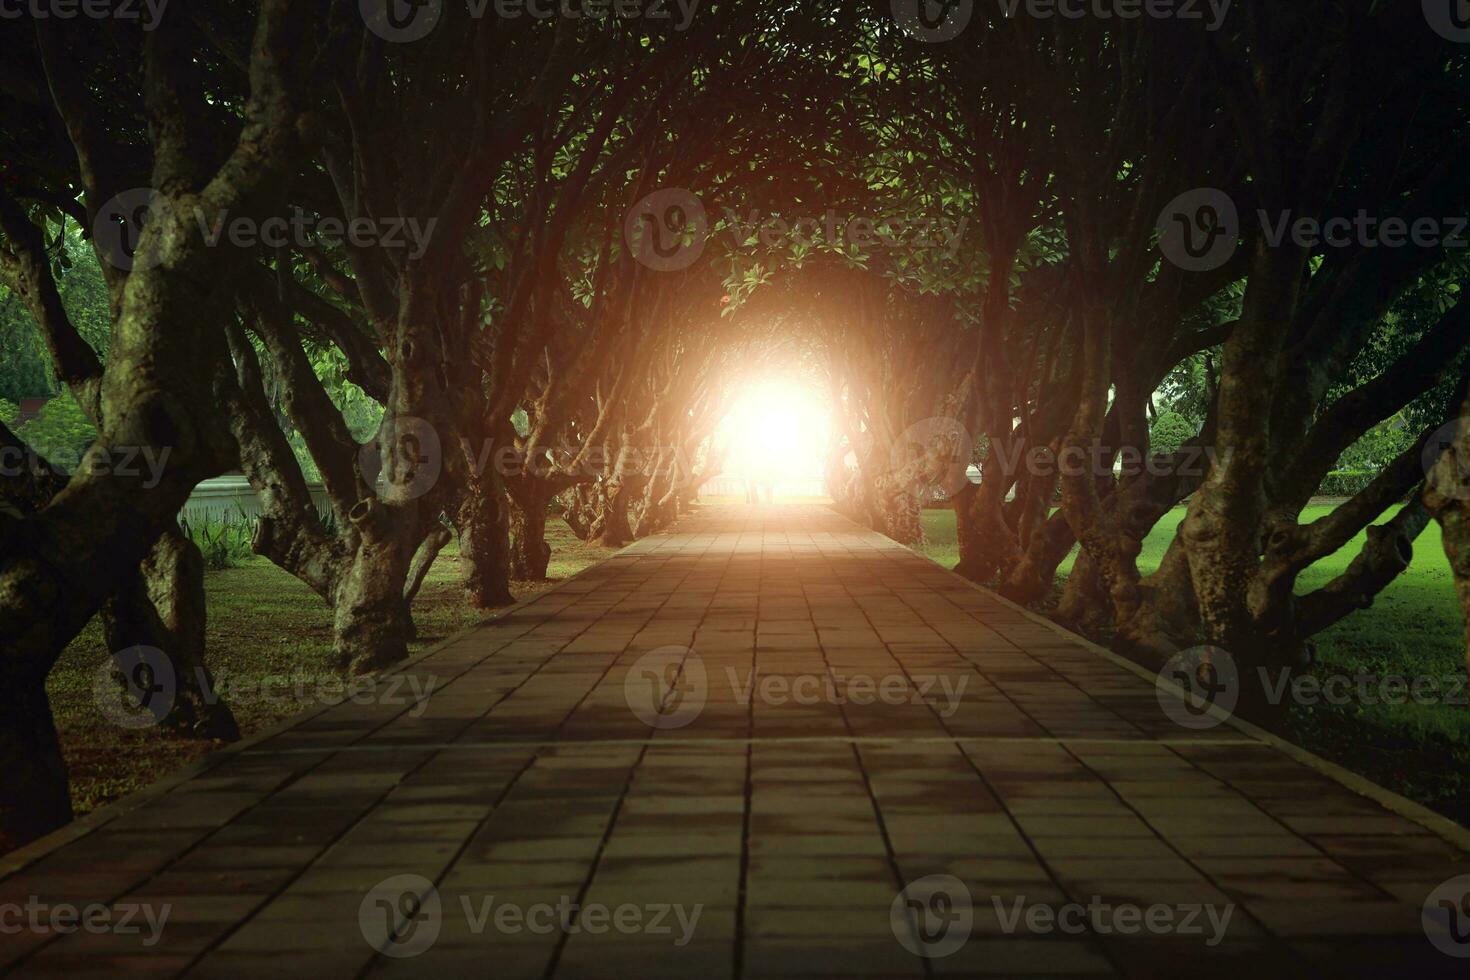 perspectiva camino camino con dos fila frangipani planta y destello ligero a final antecedentes foto